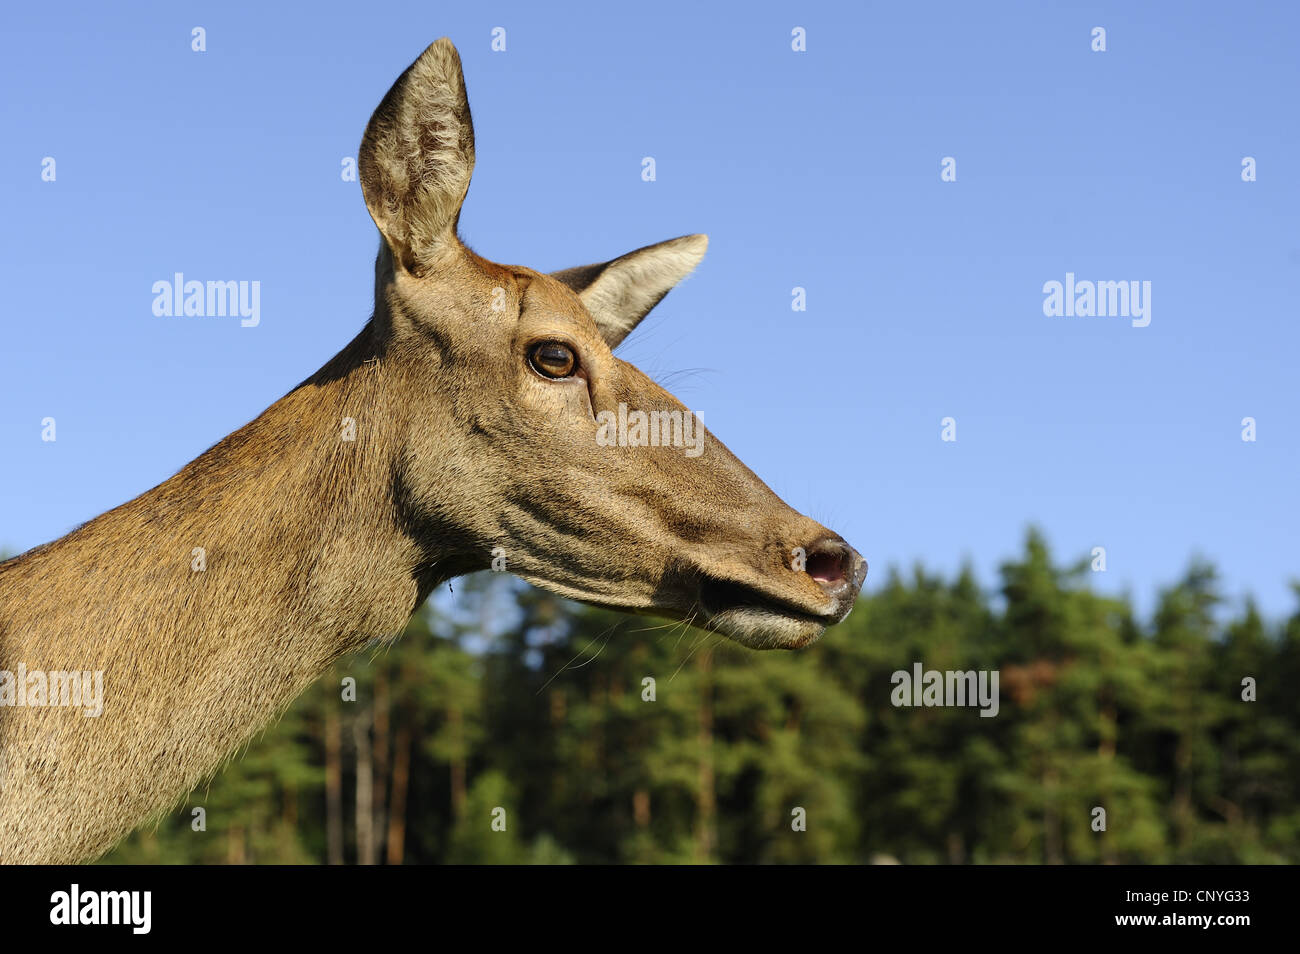 red deer (Cervus elaphus), portrait of a hind, side view, Germany, Bavaria Stock Photo